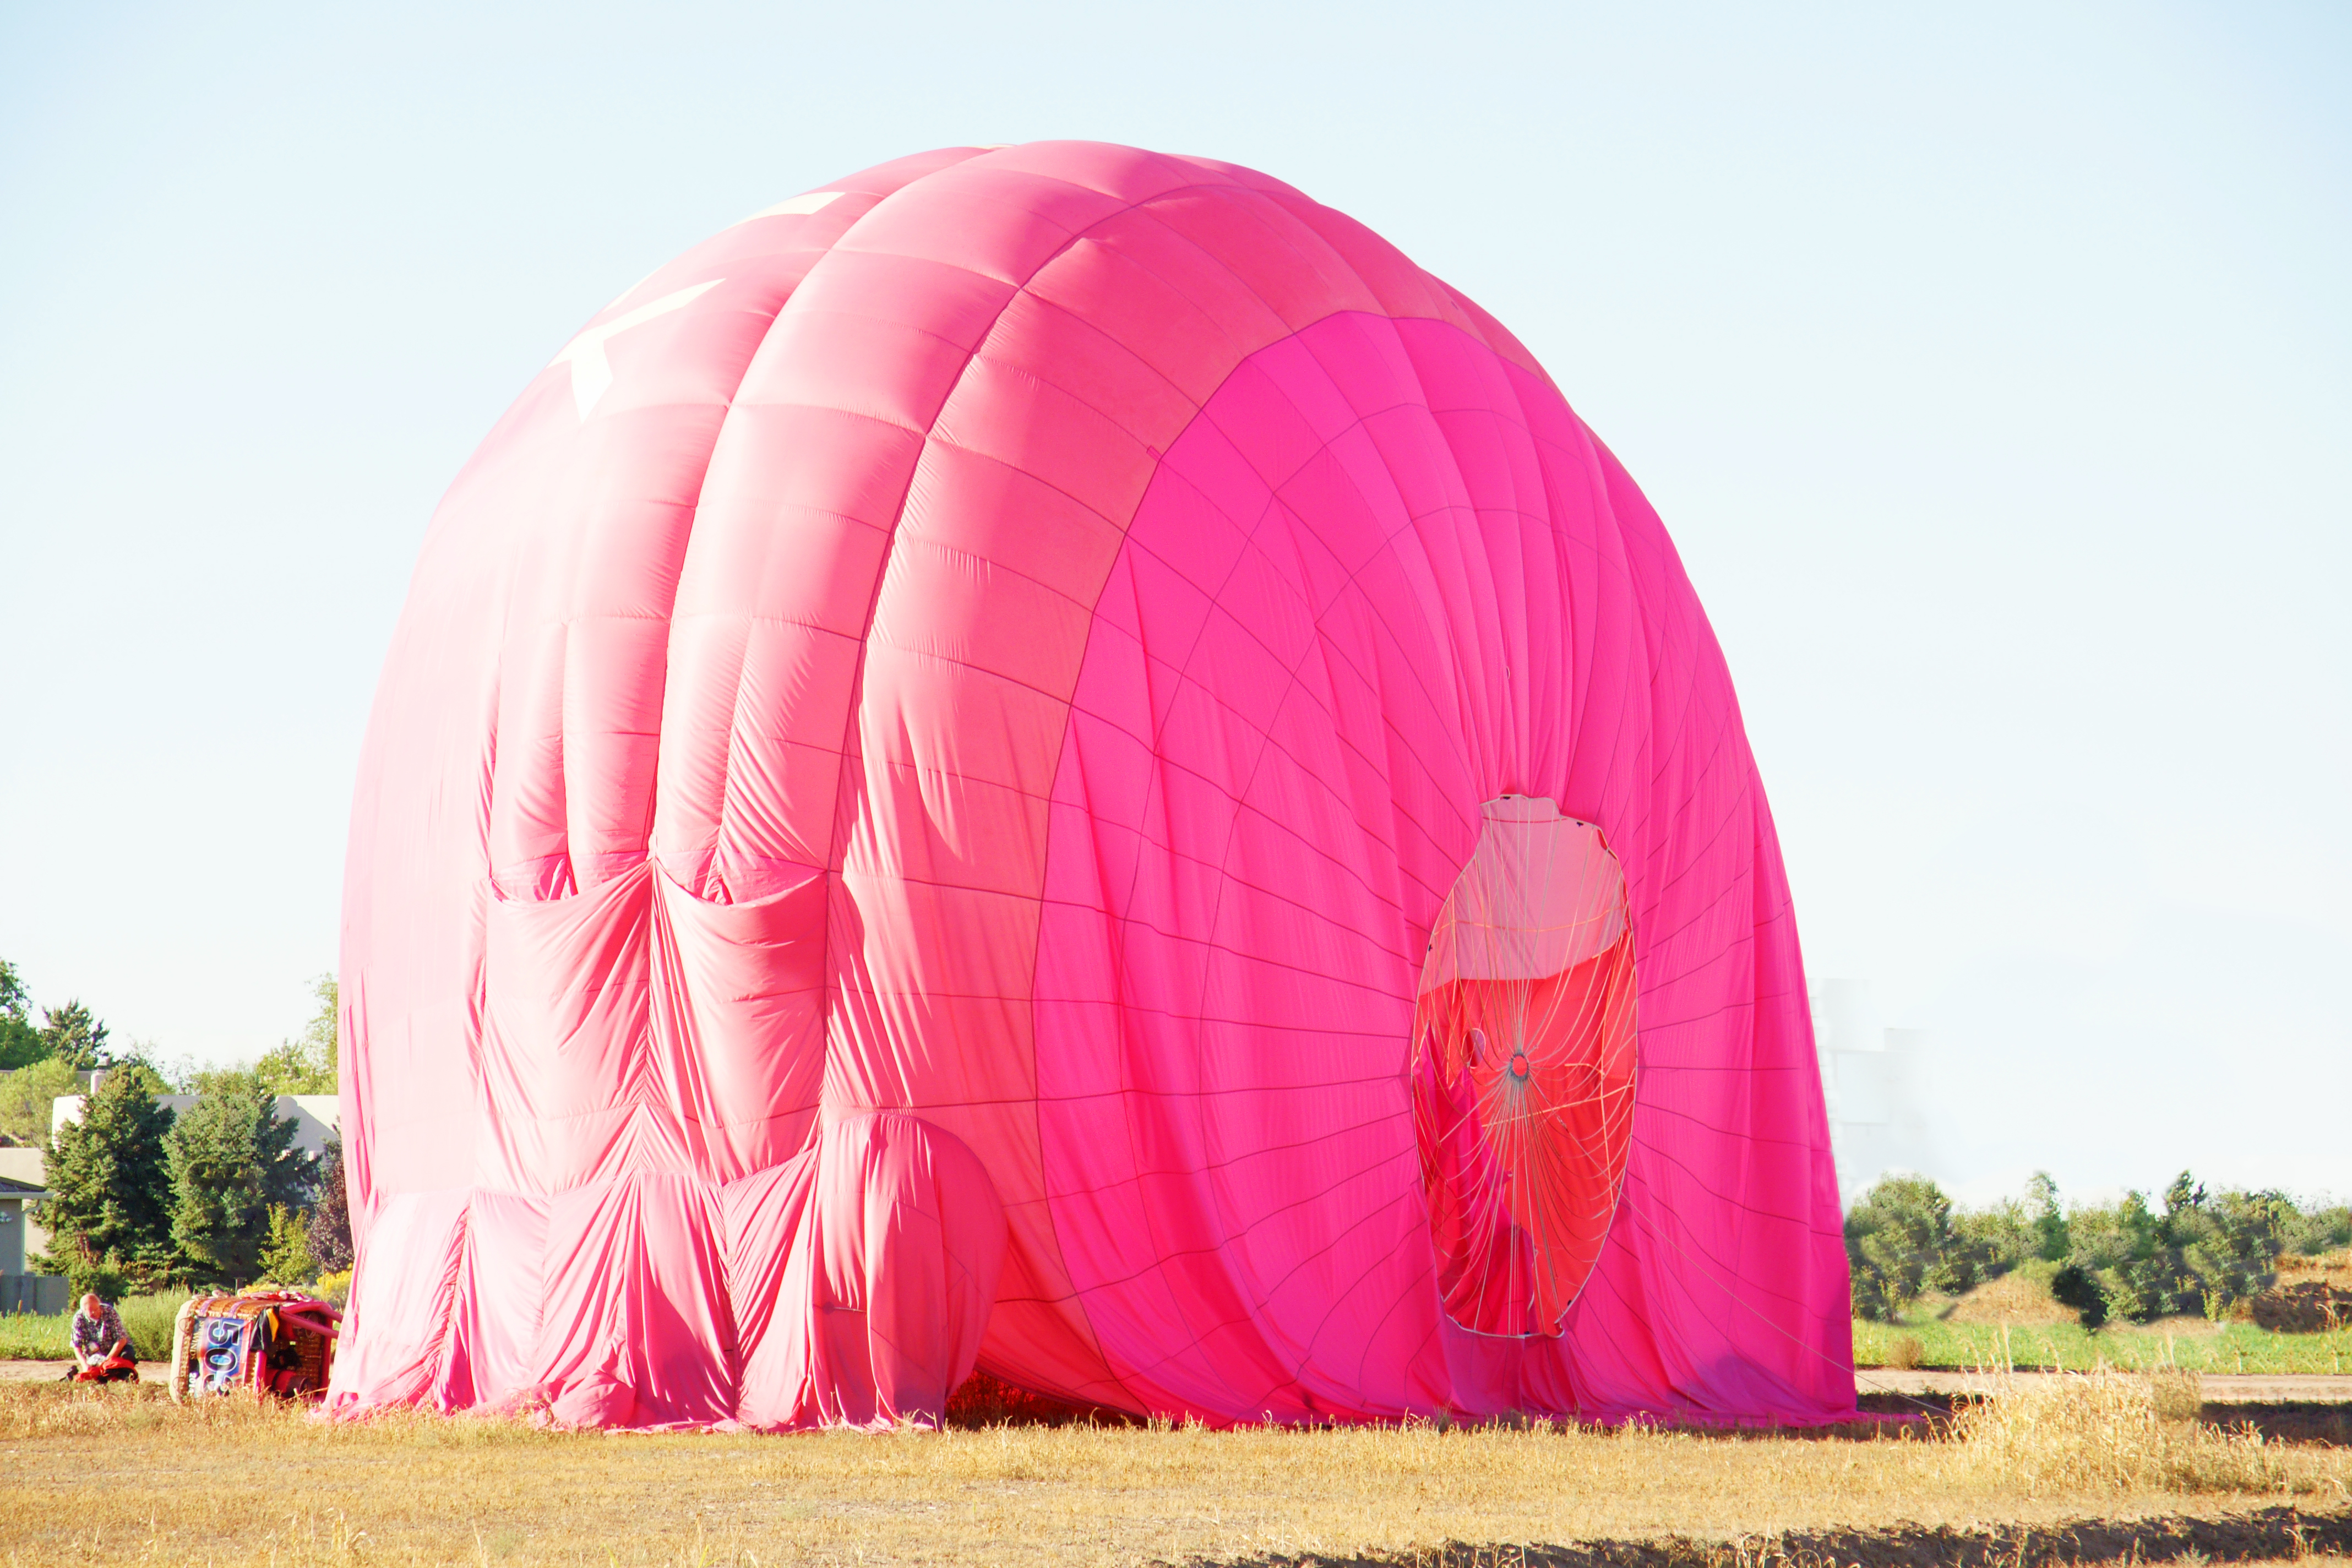 Albuquerque International Balloon Fiesta – Part 2